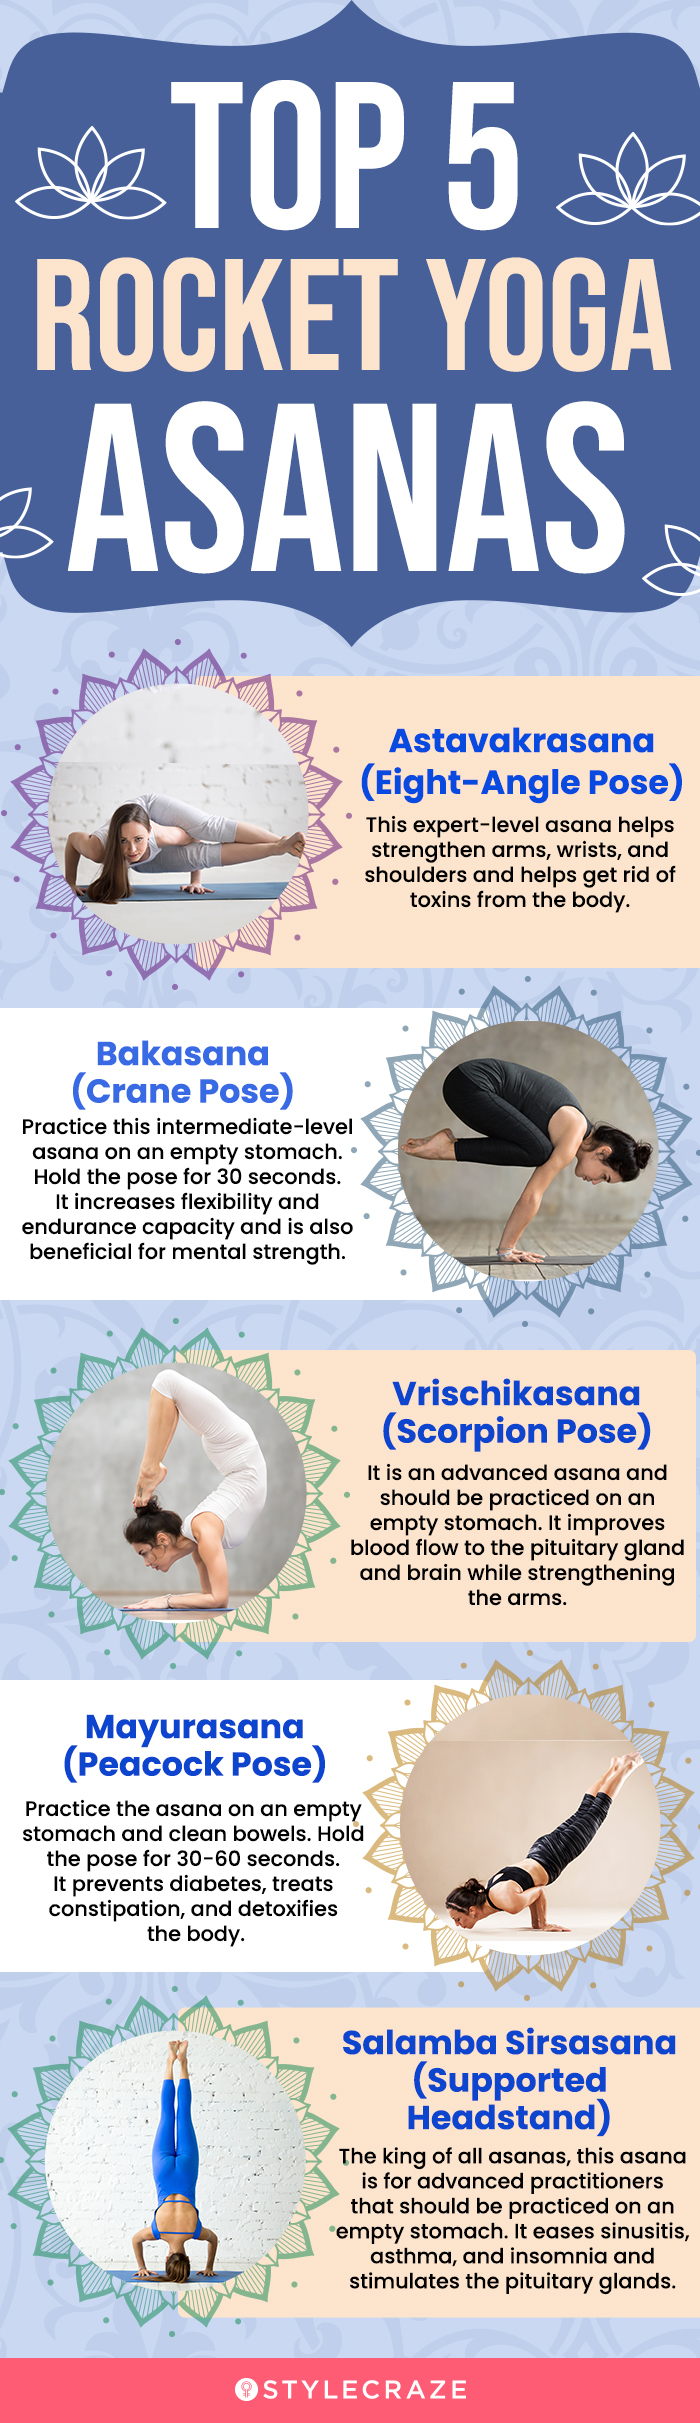 top 5 rocket yoga asanas (infographic)